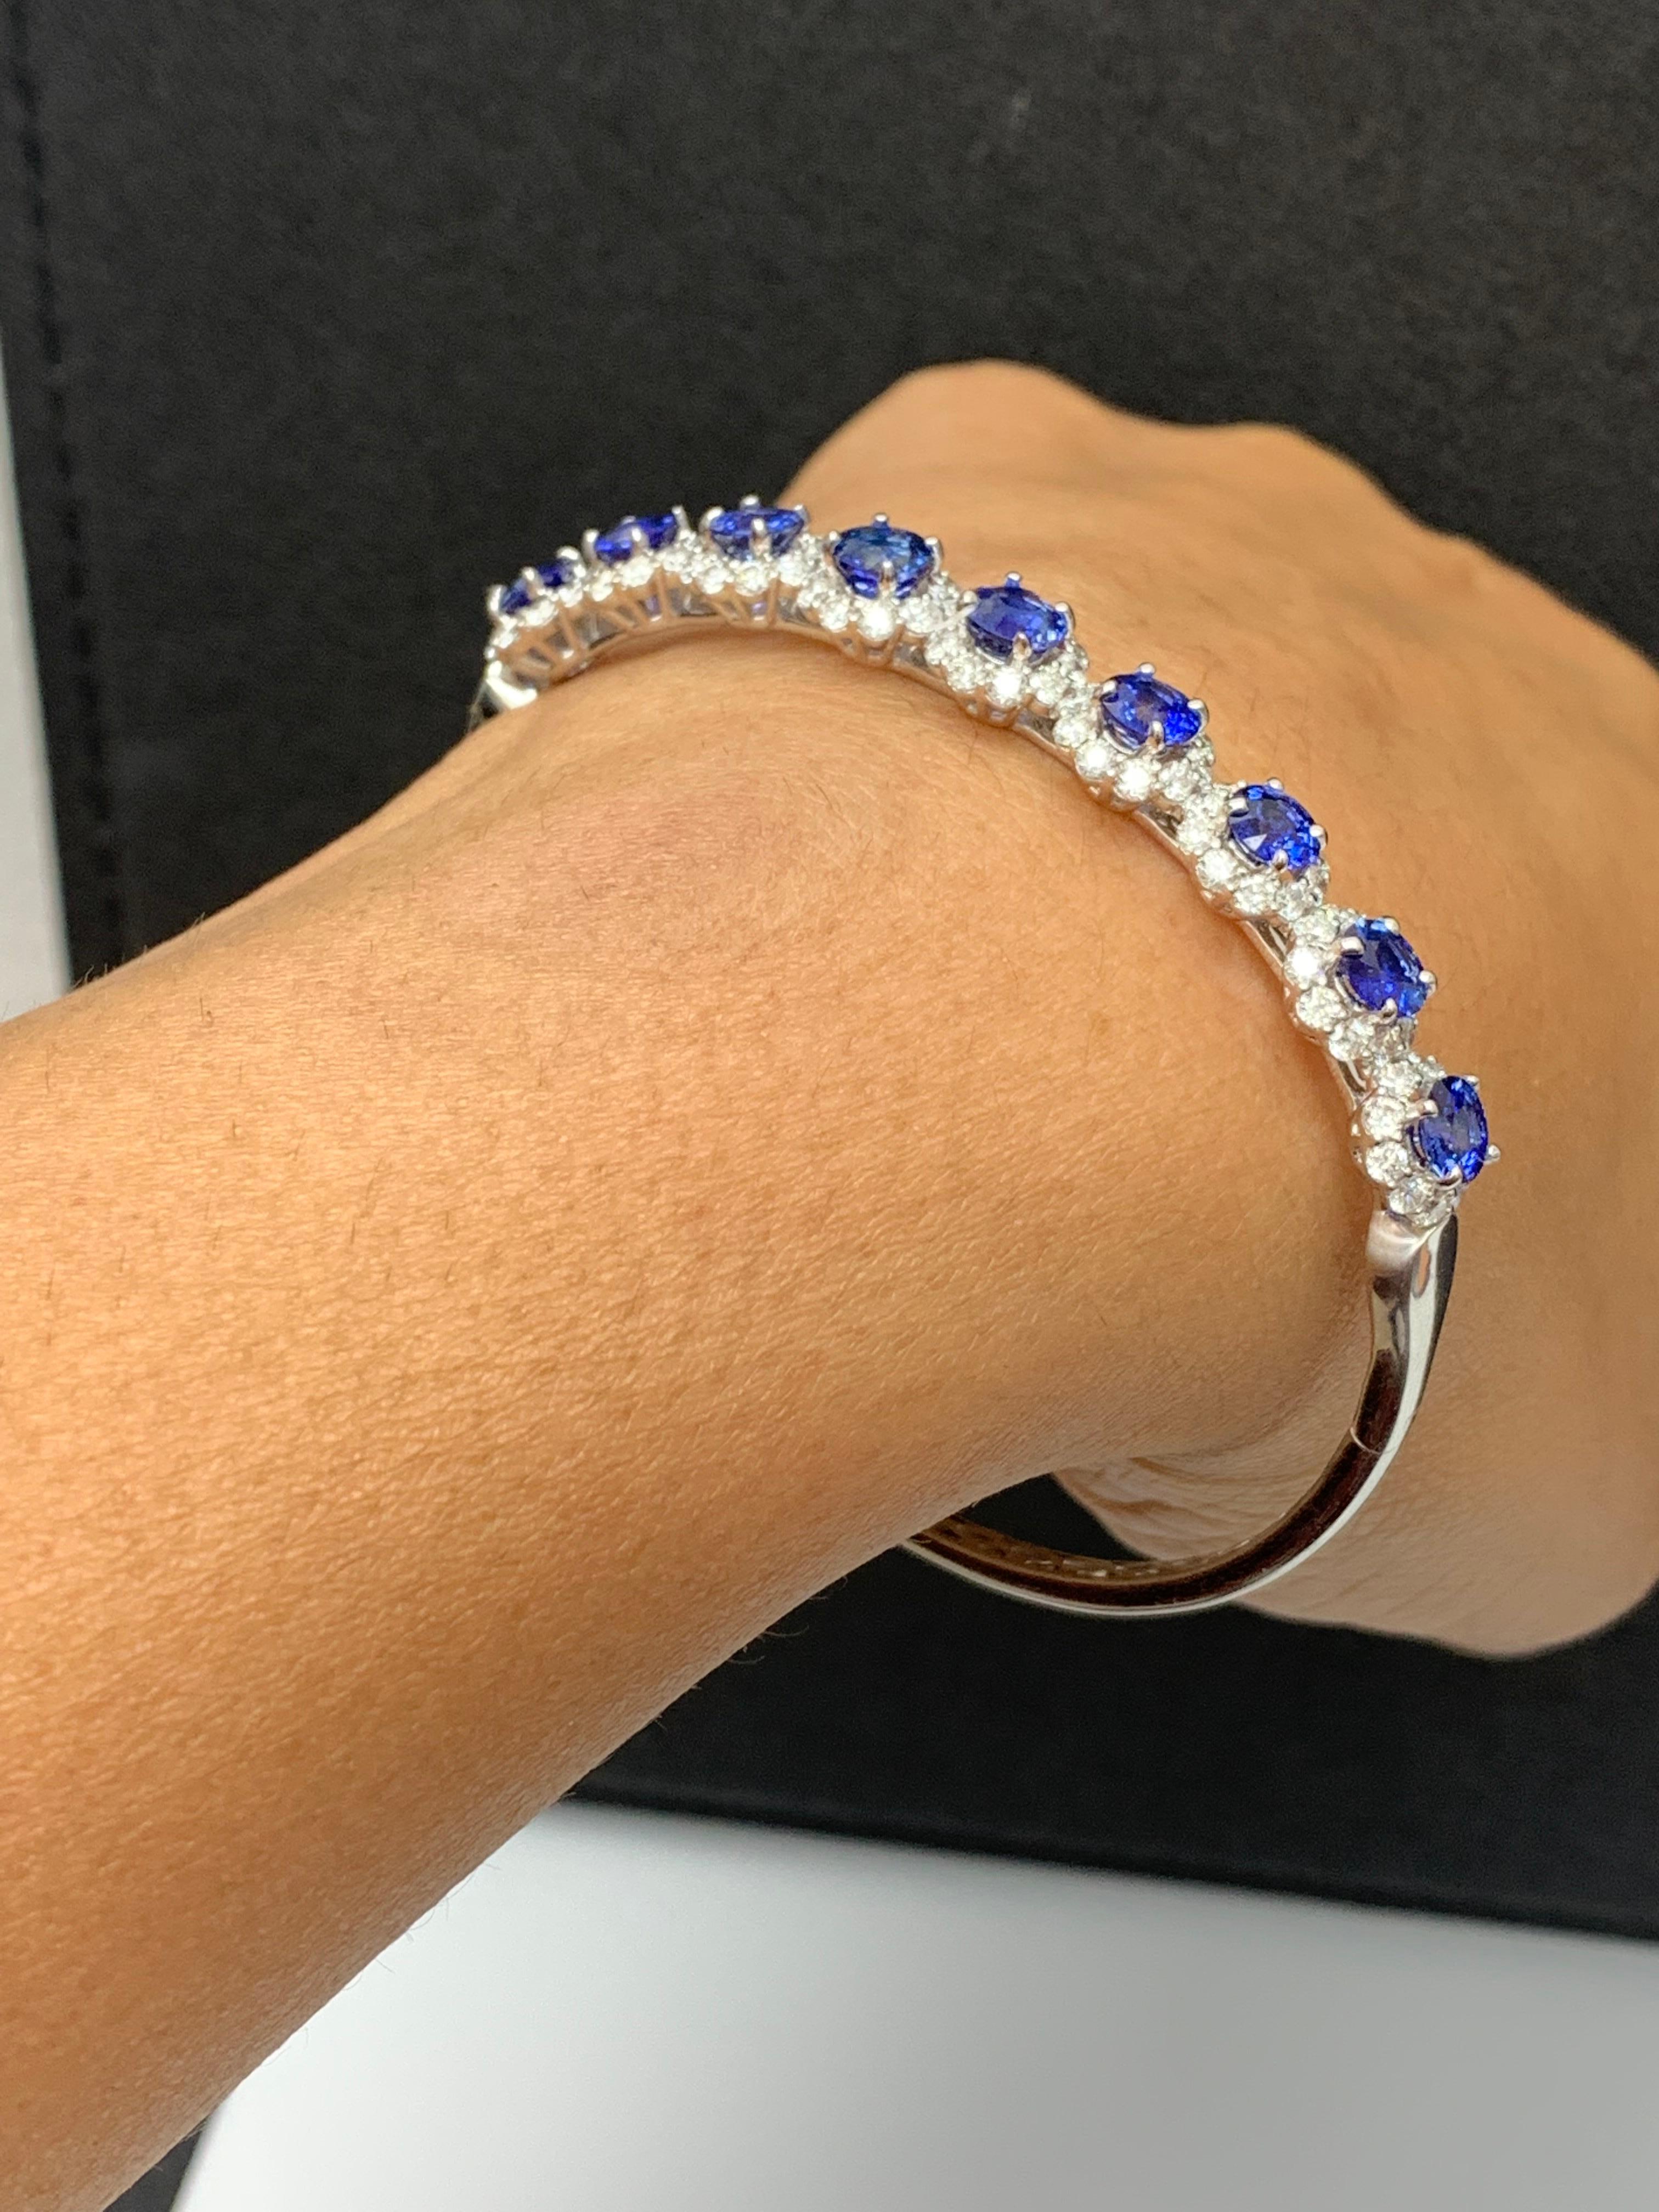 4.88 Carat Brilliant Cut Blue Sapphire Diamond Bangle Bracelet in 18k White Gold For Sale 1